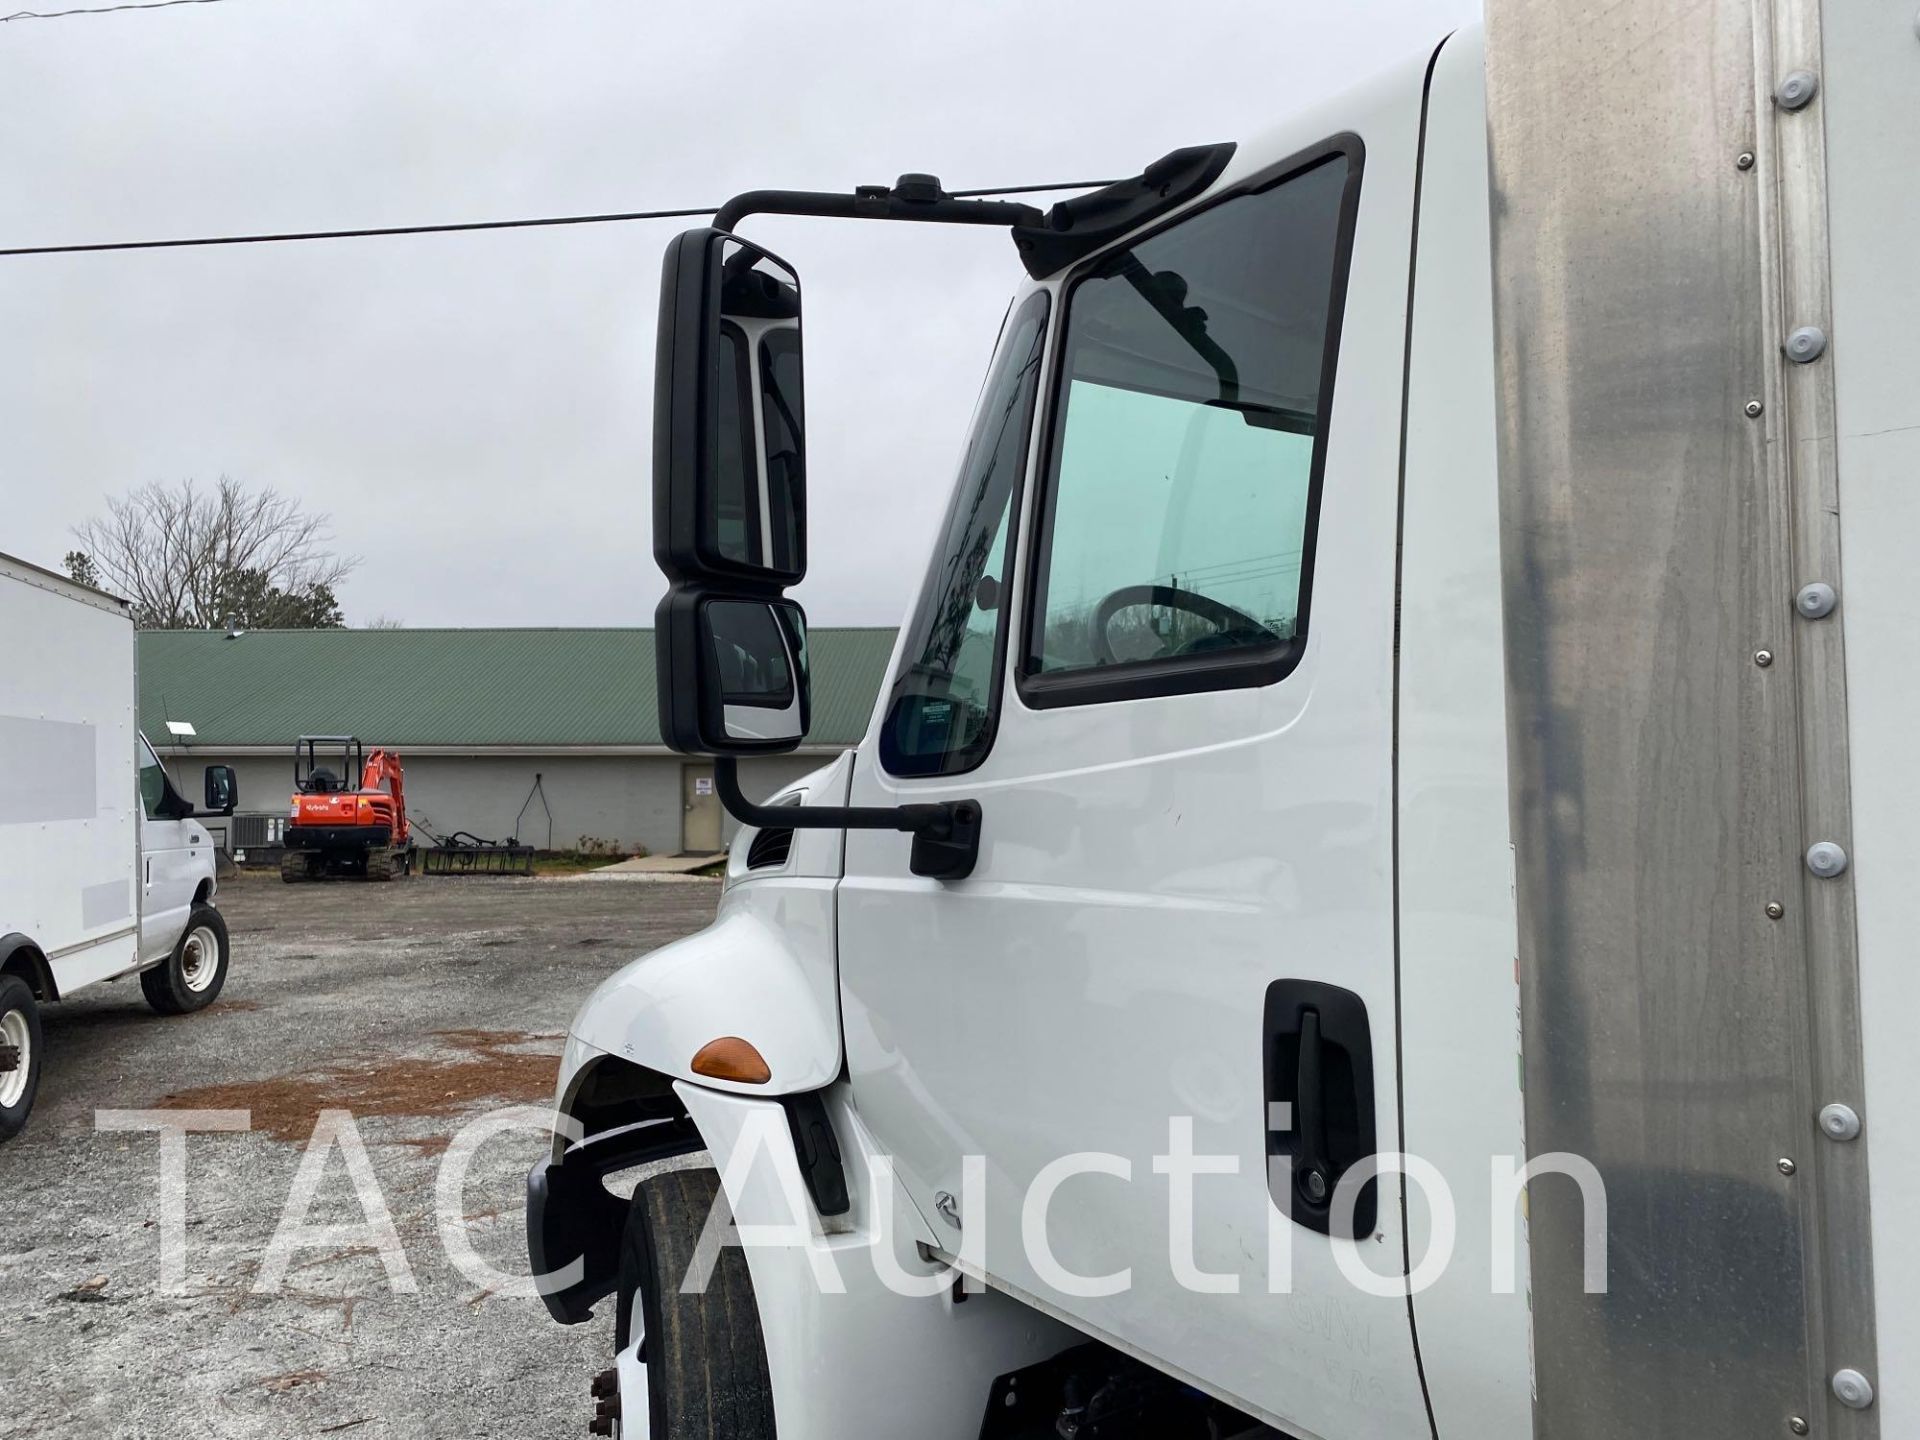 2019 International Durastar 4300 26ft Box Truck - Image 18 of 85